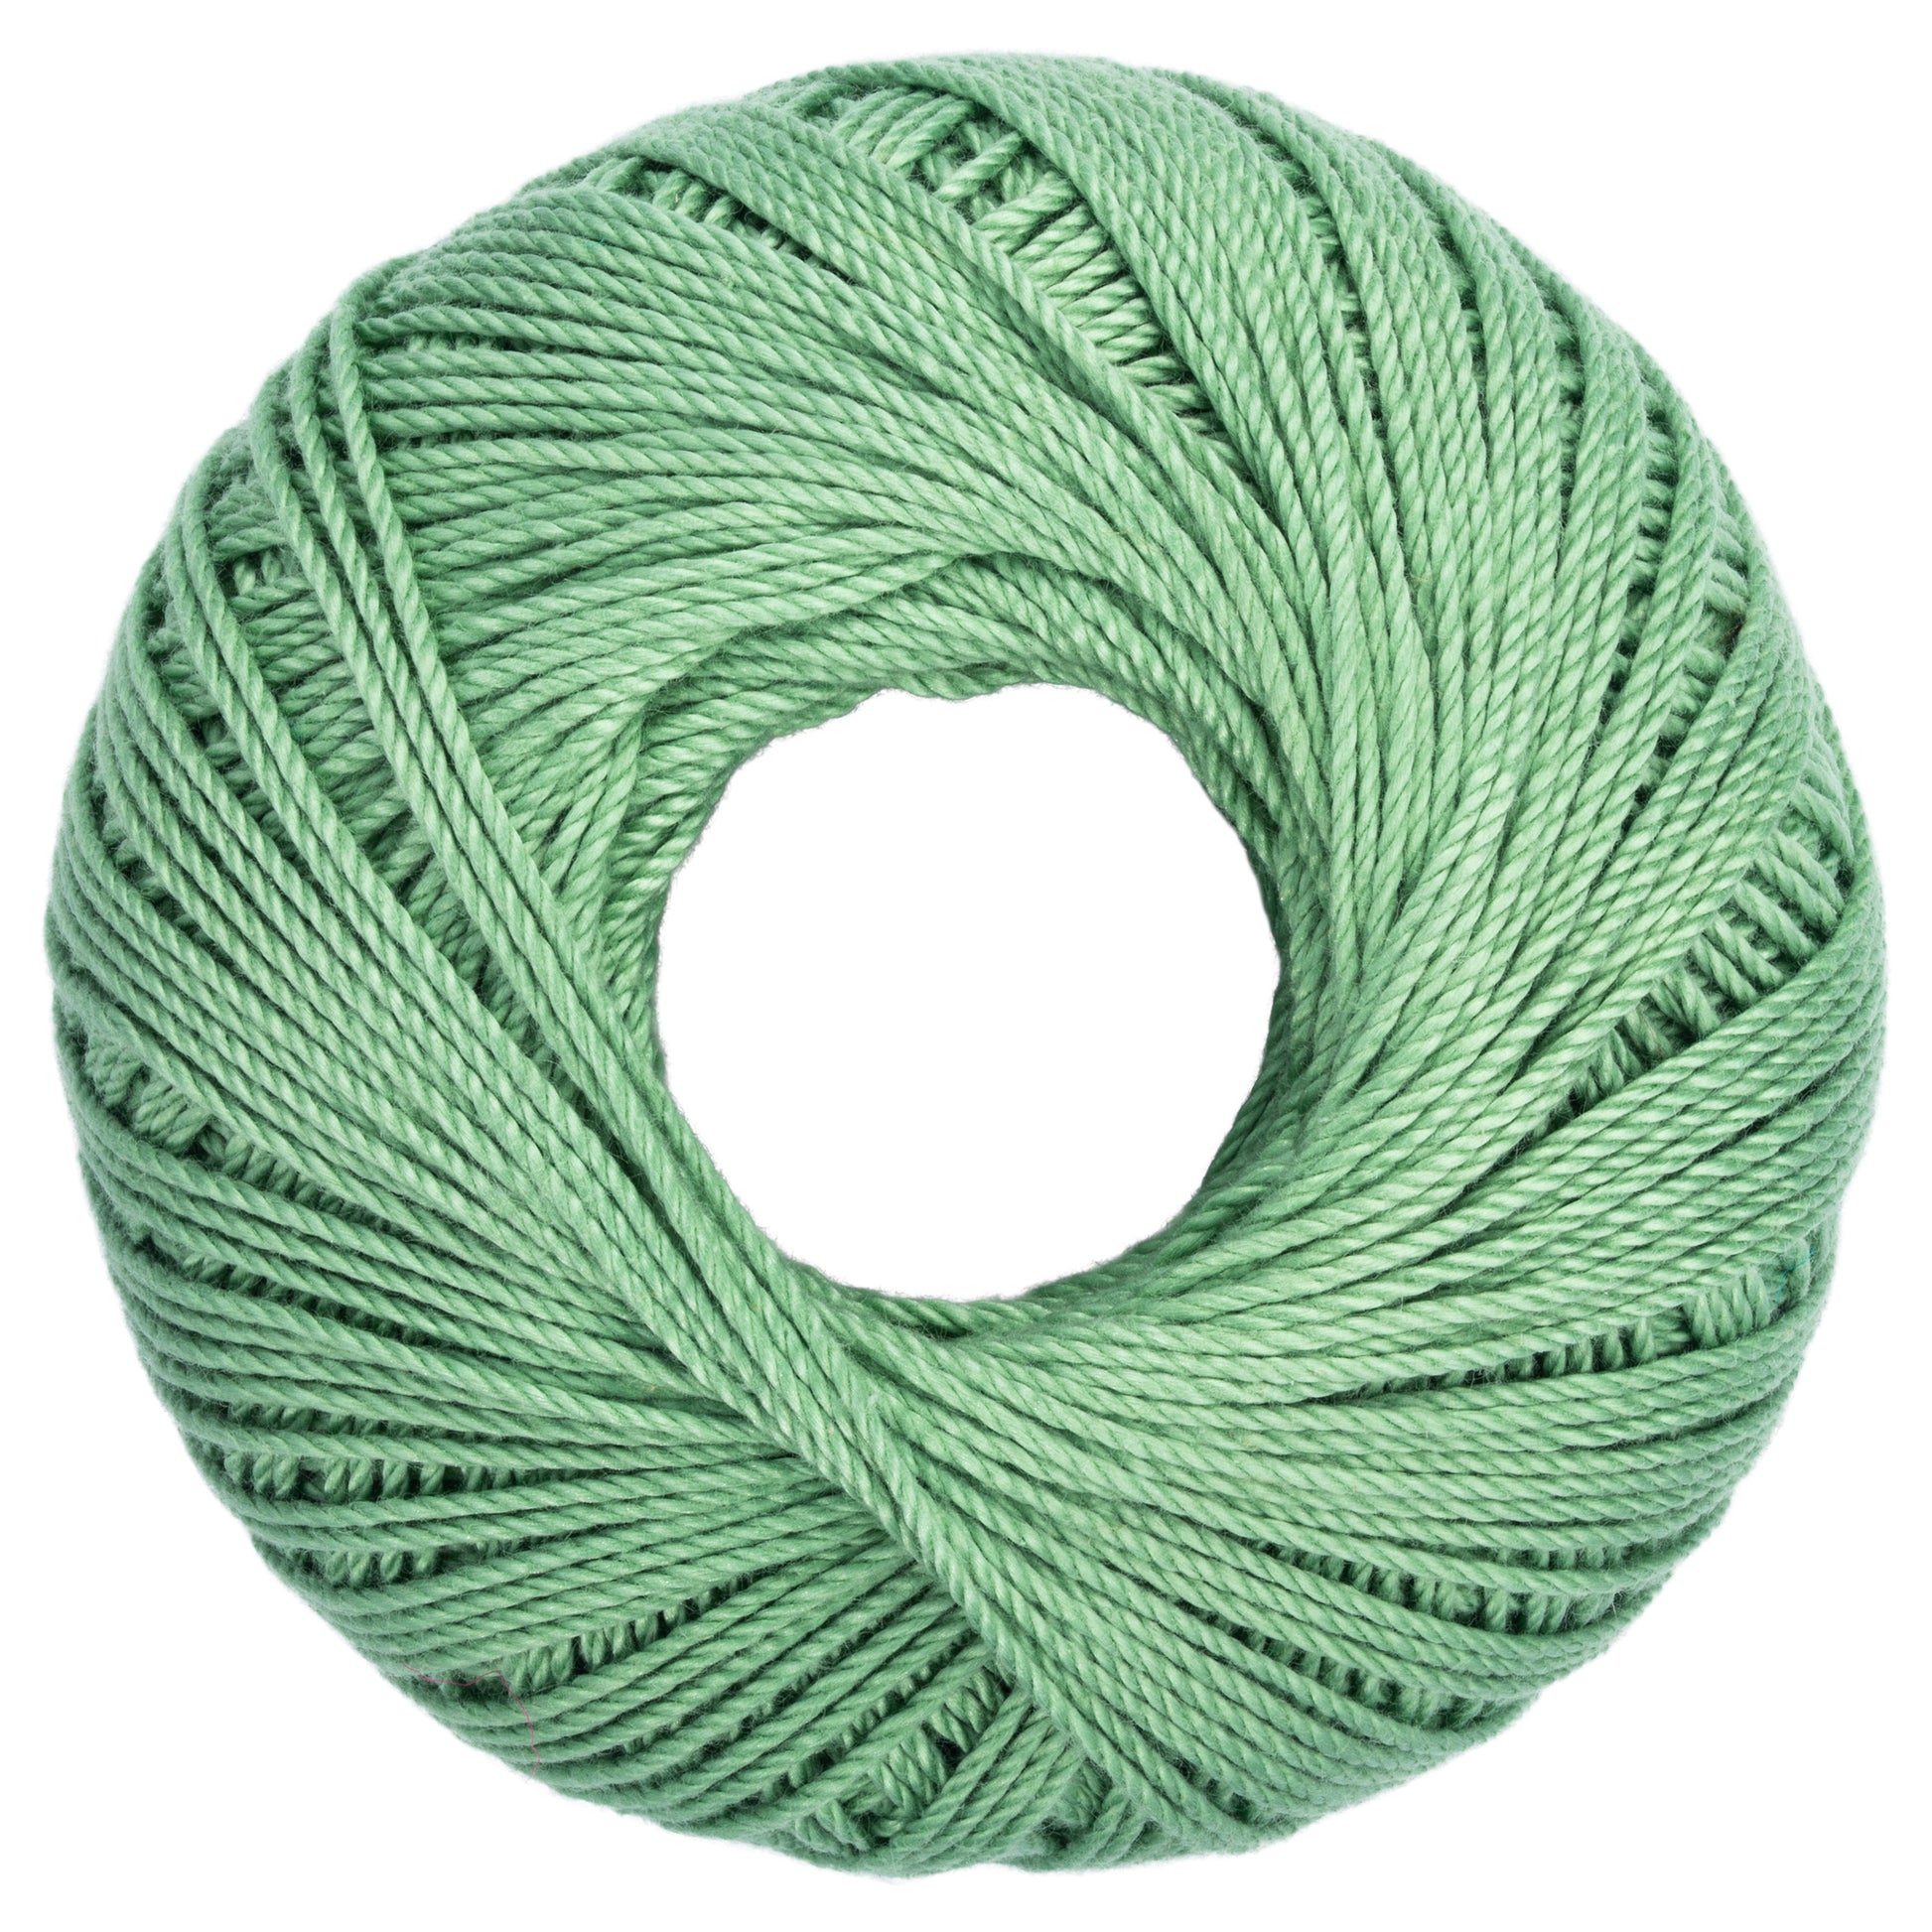 Aunt Lydias Crochet Thread Fashion 3 Product Review NM182 